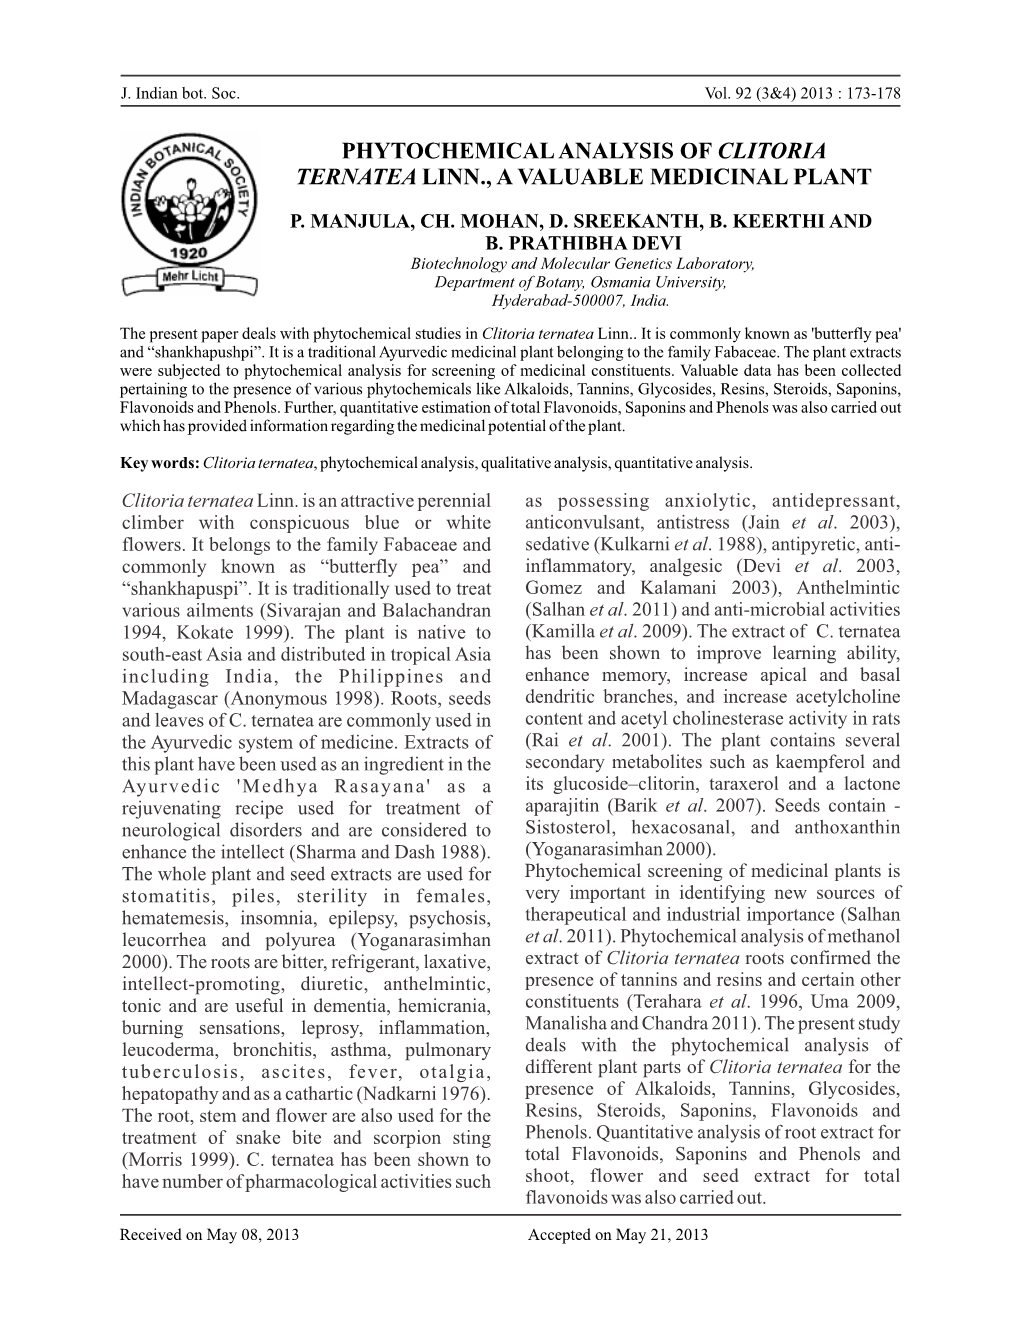 Phytochemical Analysis of Clitoria Ternatea Linn., a Valuable Medicinal Plant